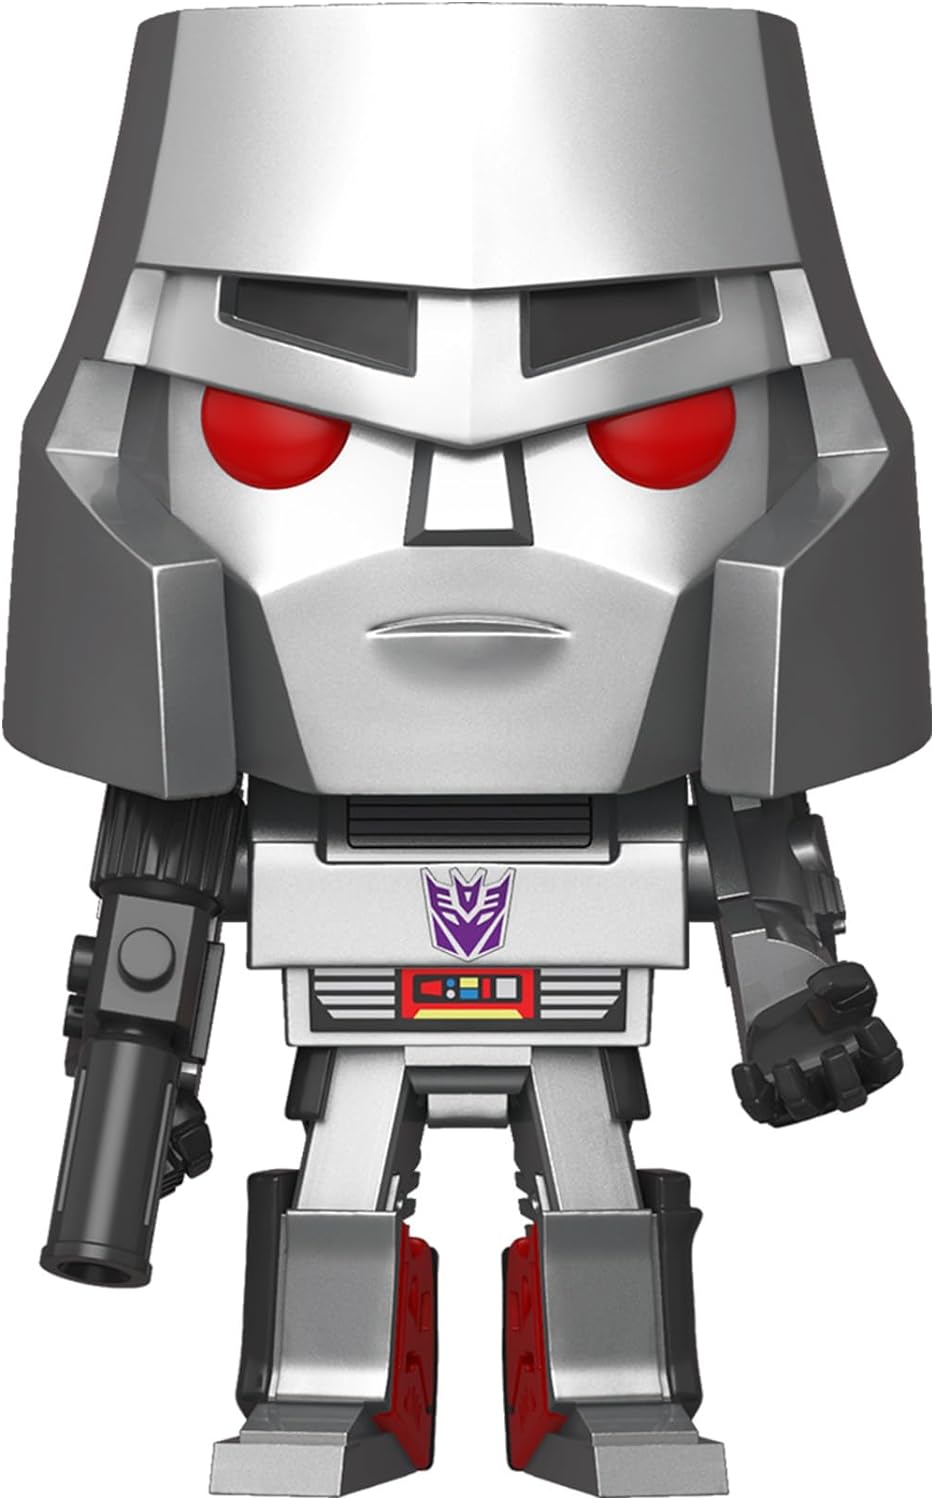 Funko  Transformers  Megatron